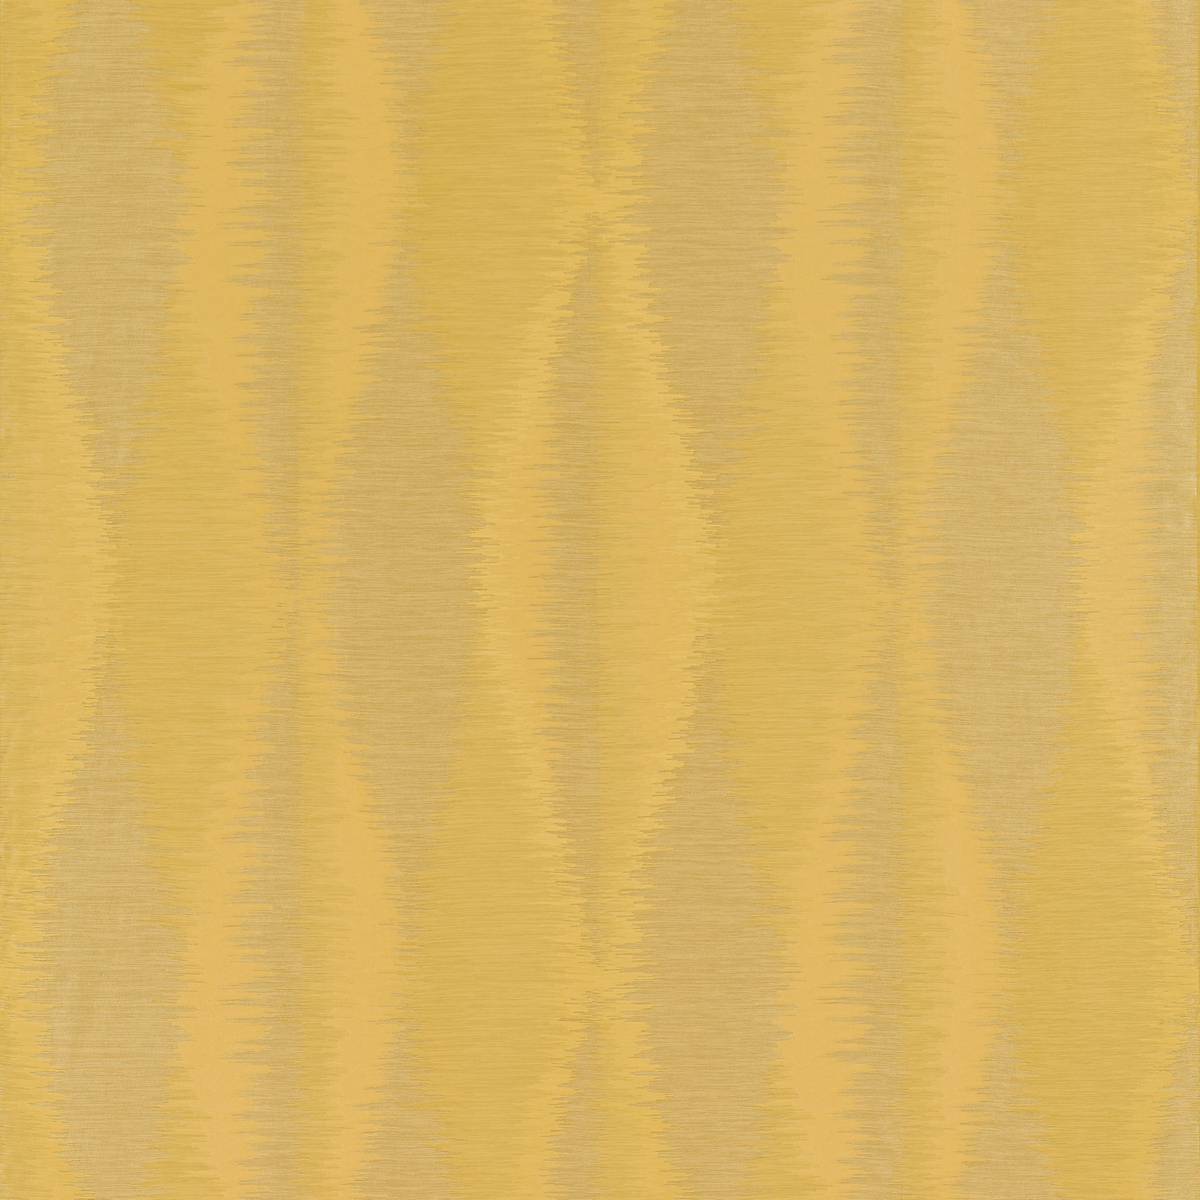 Umi Wheat Fabric by Zoffany